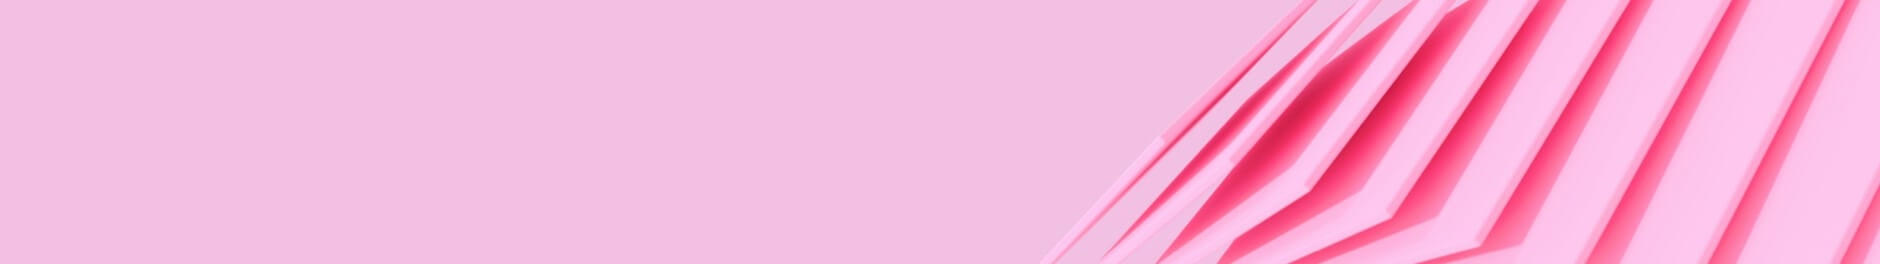 pink cards floating on pink background